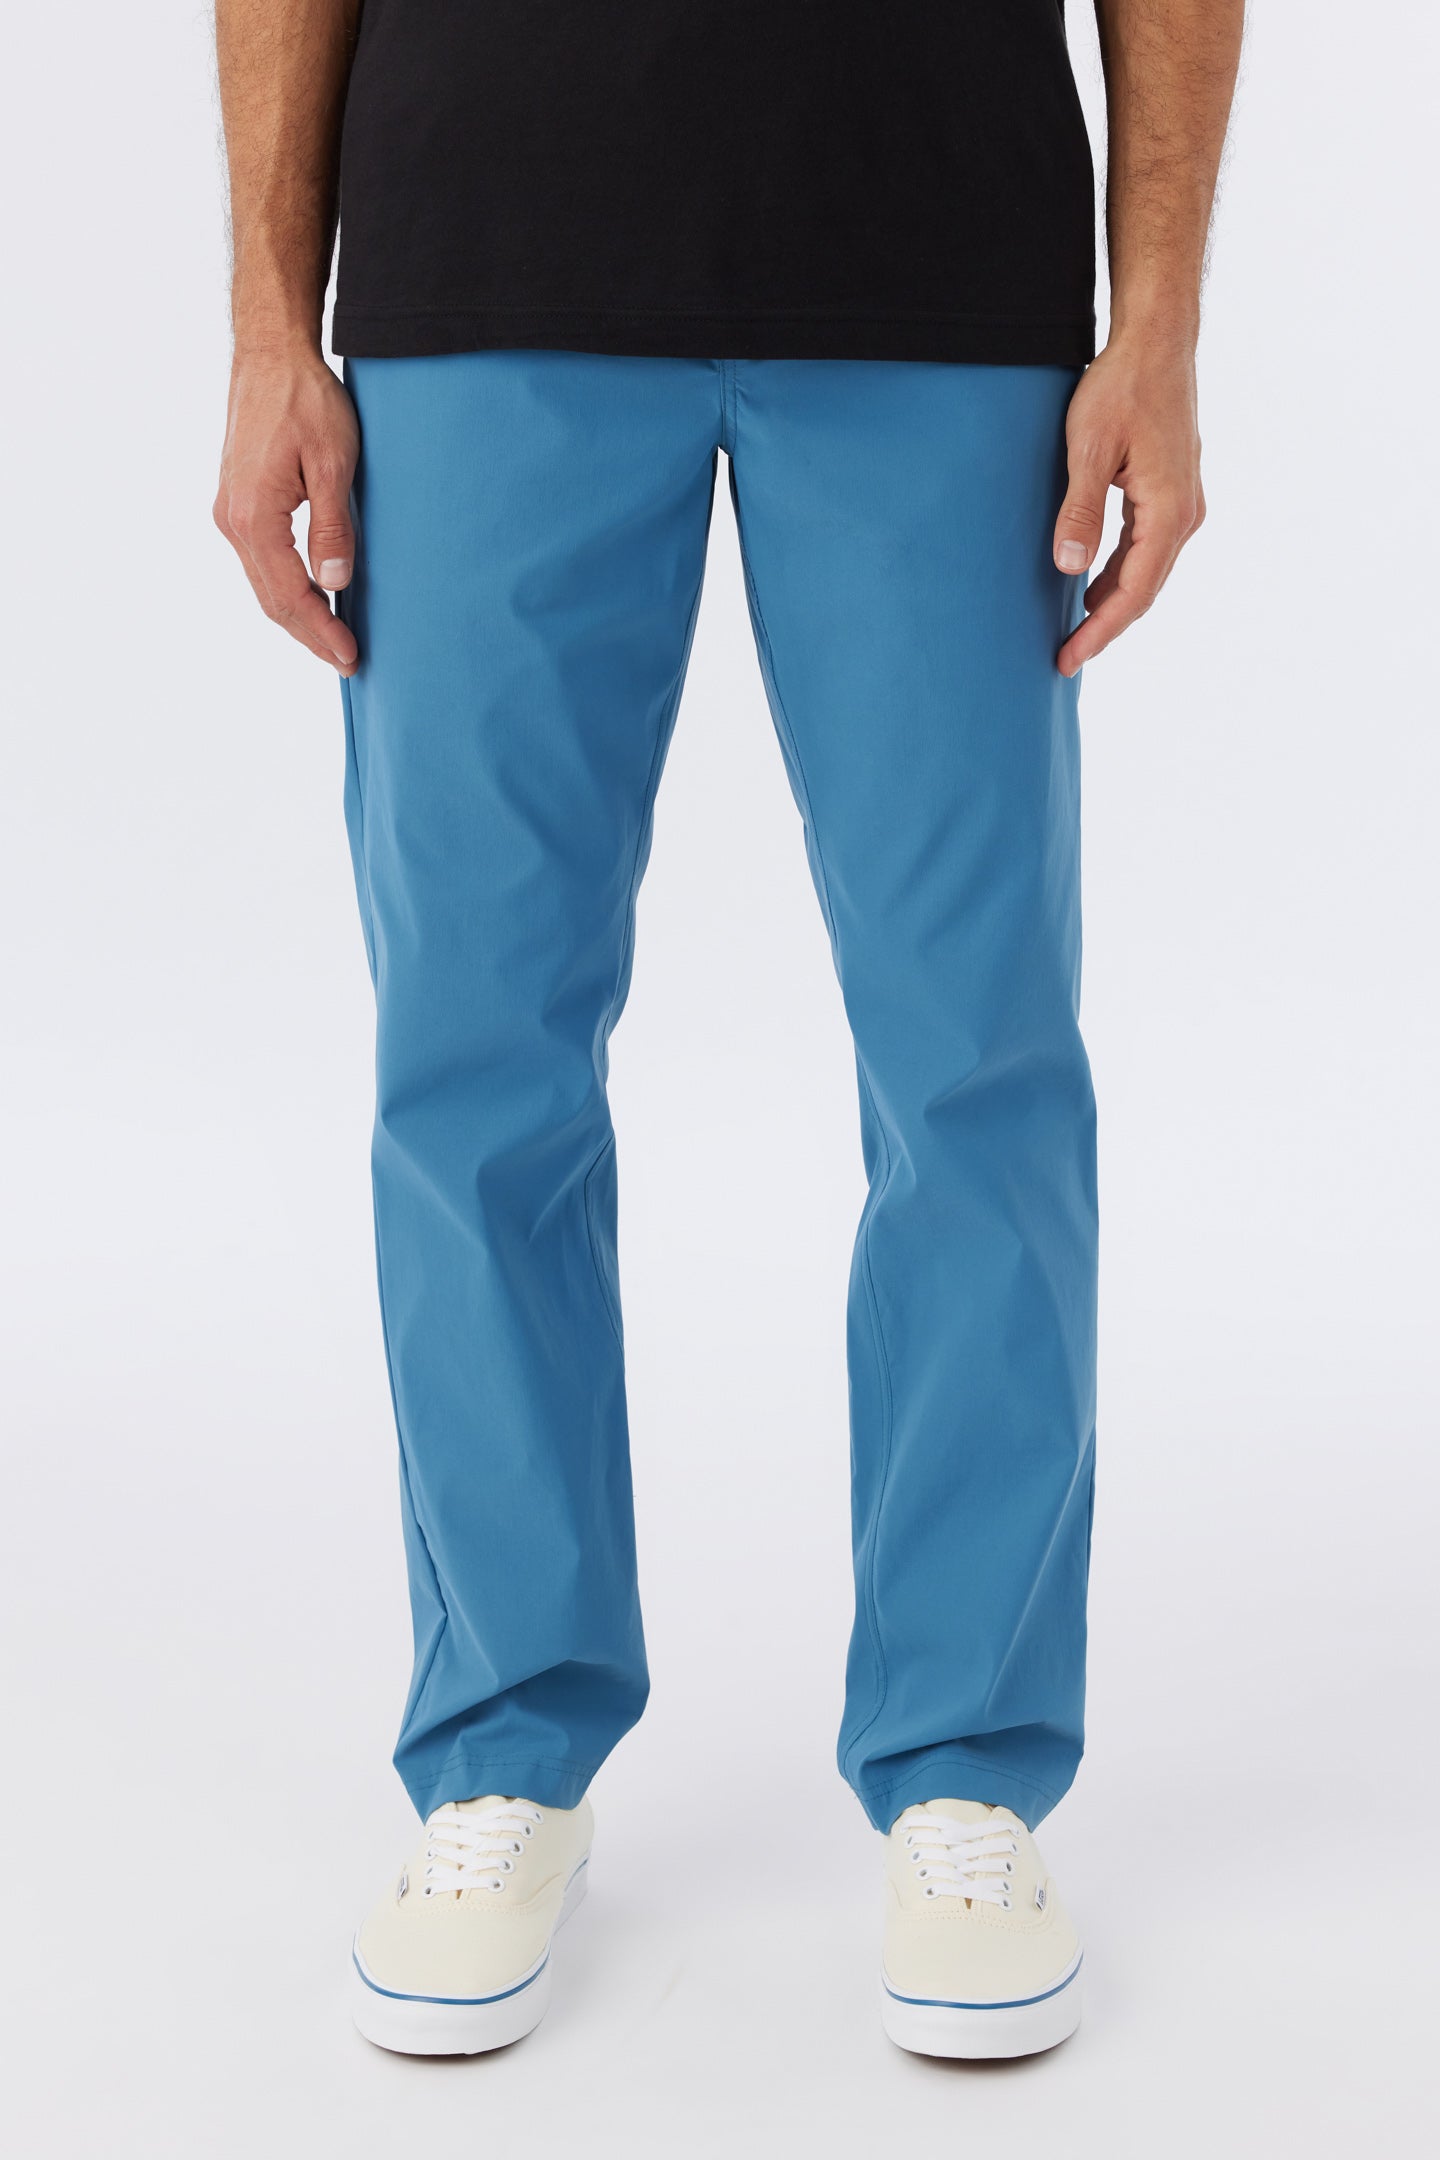 Farmacell Bodyshaper 609Y (Blue - ShopStyle Activewear Trousers